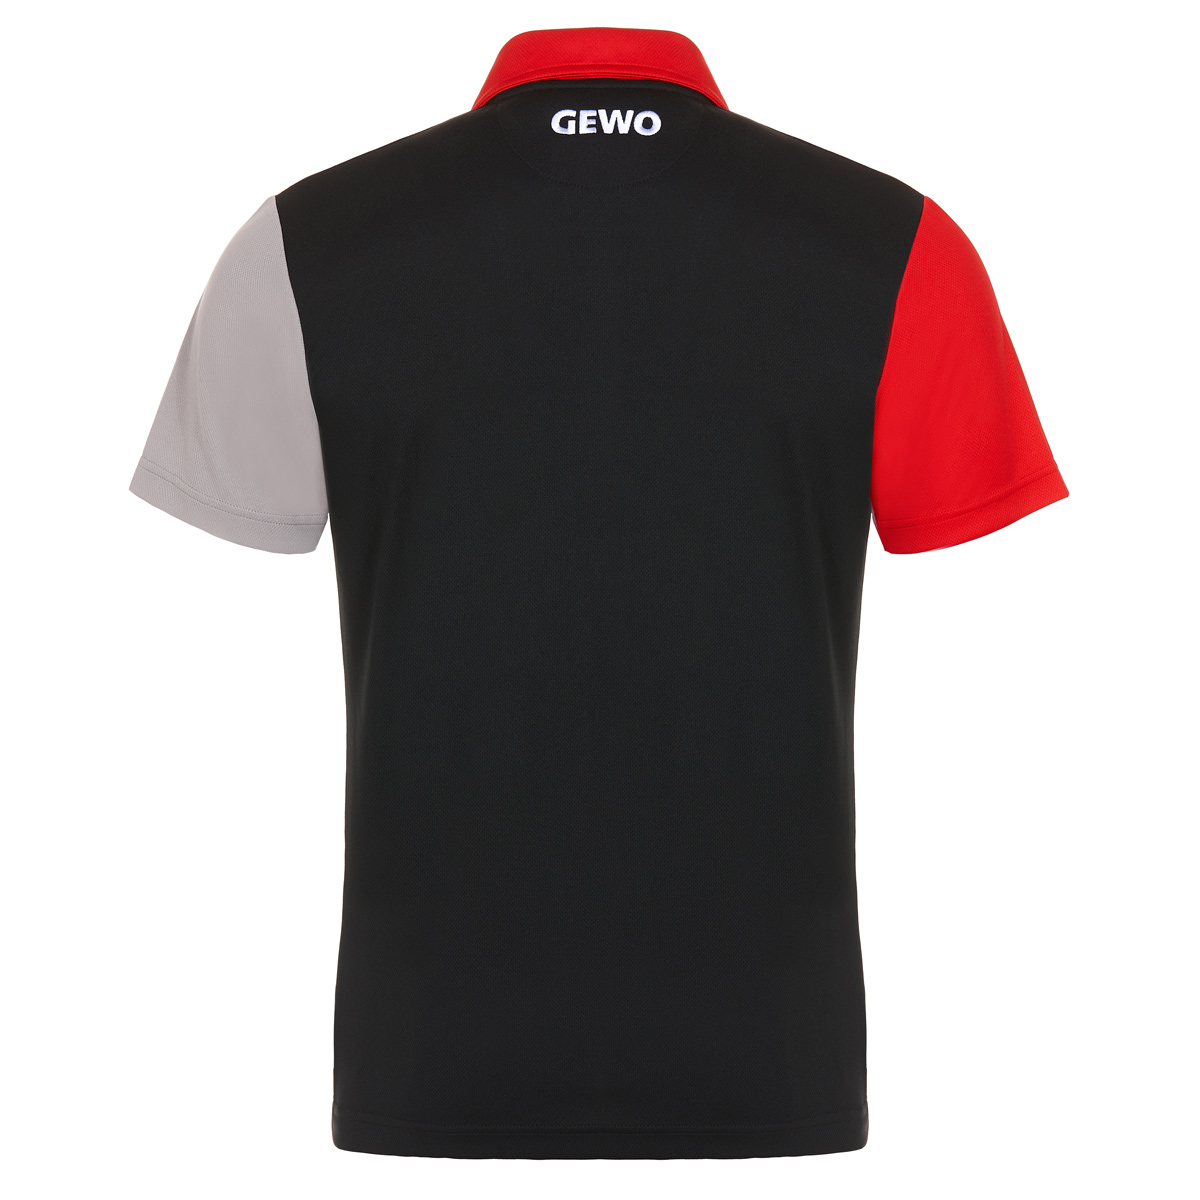 GEWO Shirt Ravenna Cotton black/red S